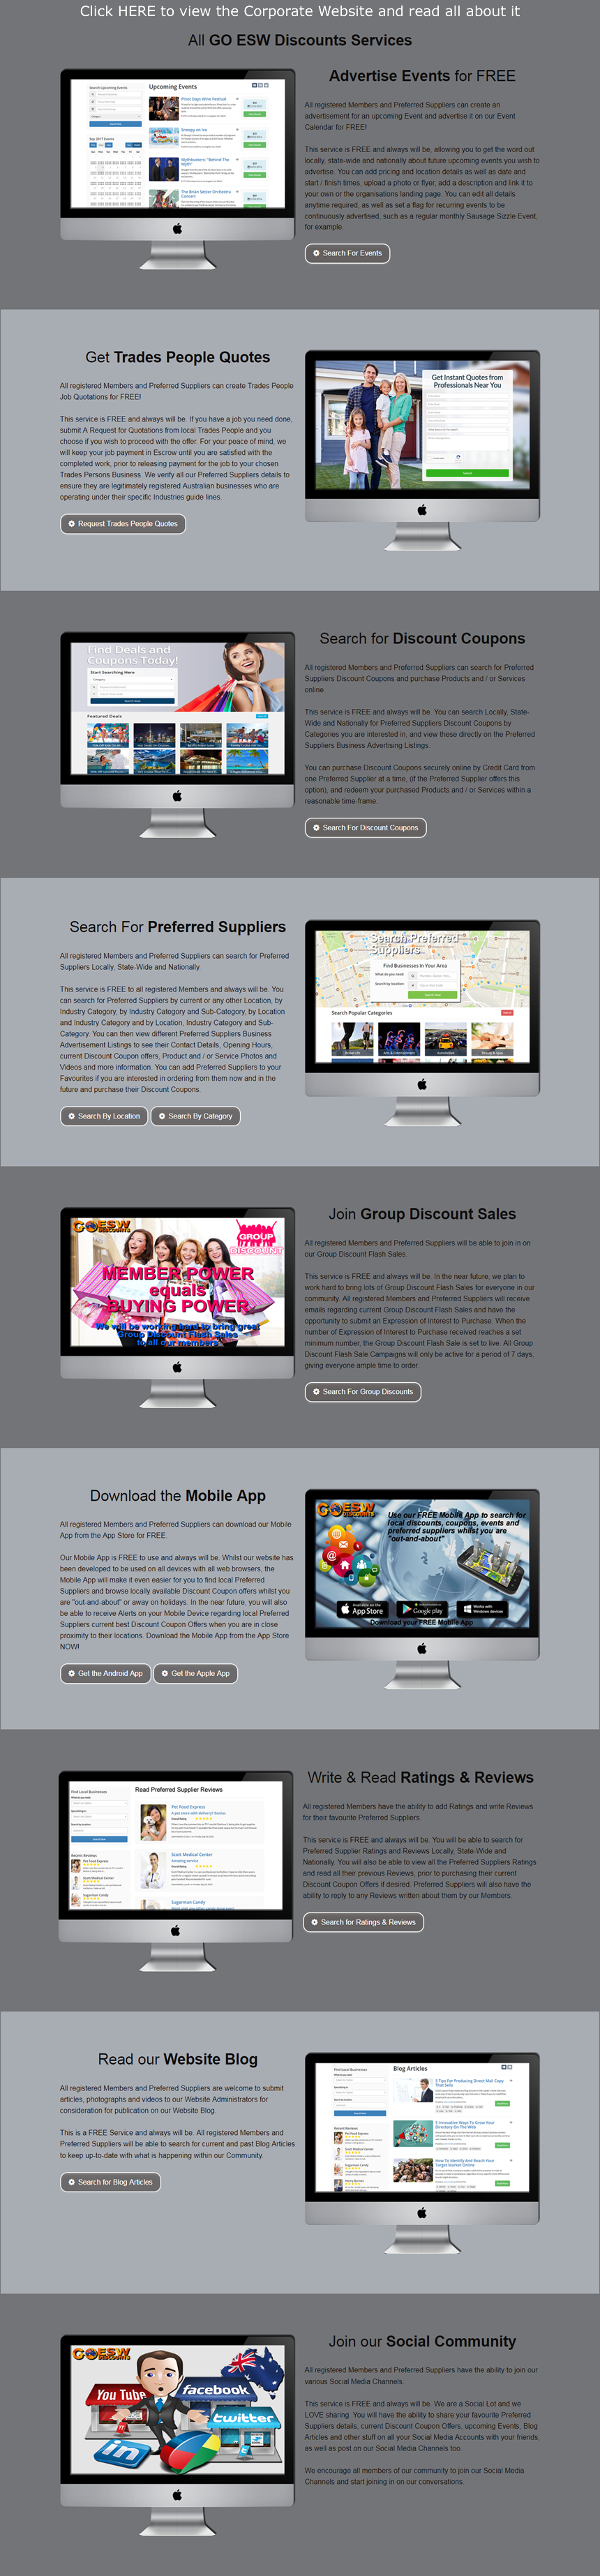 Double 8 Media Pty. Ltd. GO ESW Discounts Website Services Image 1